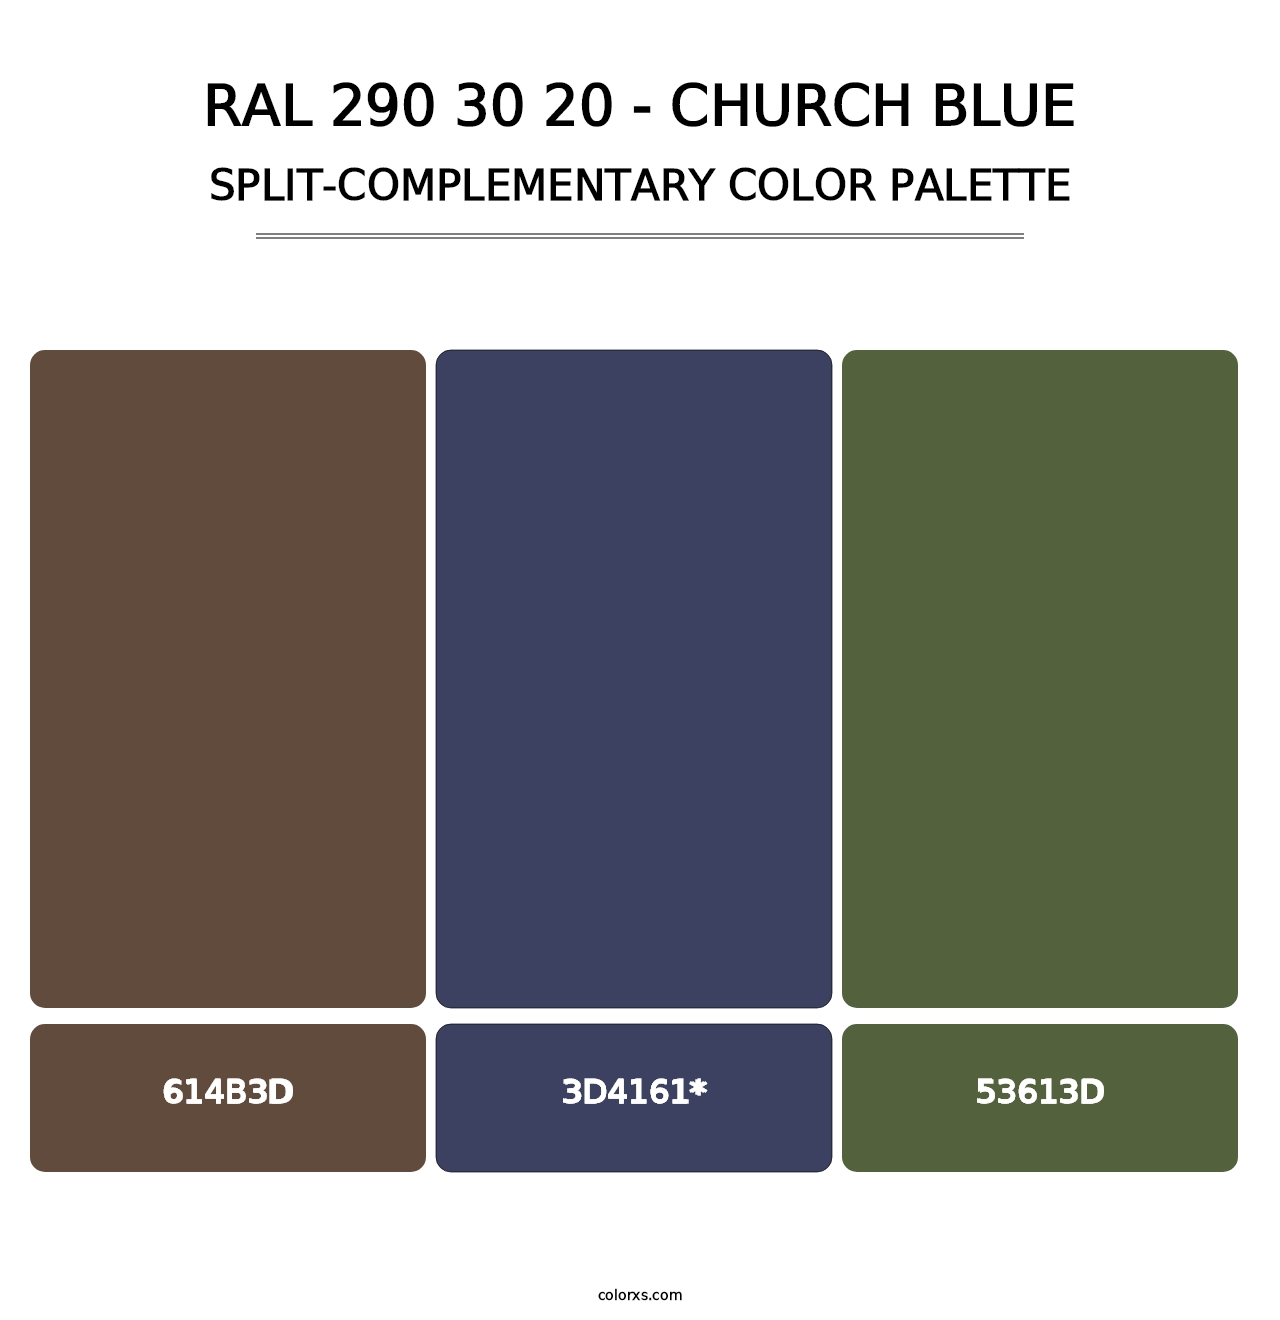 RAL 290 30 20 - Church Blue - Split-Complementary Color Palette